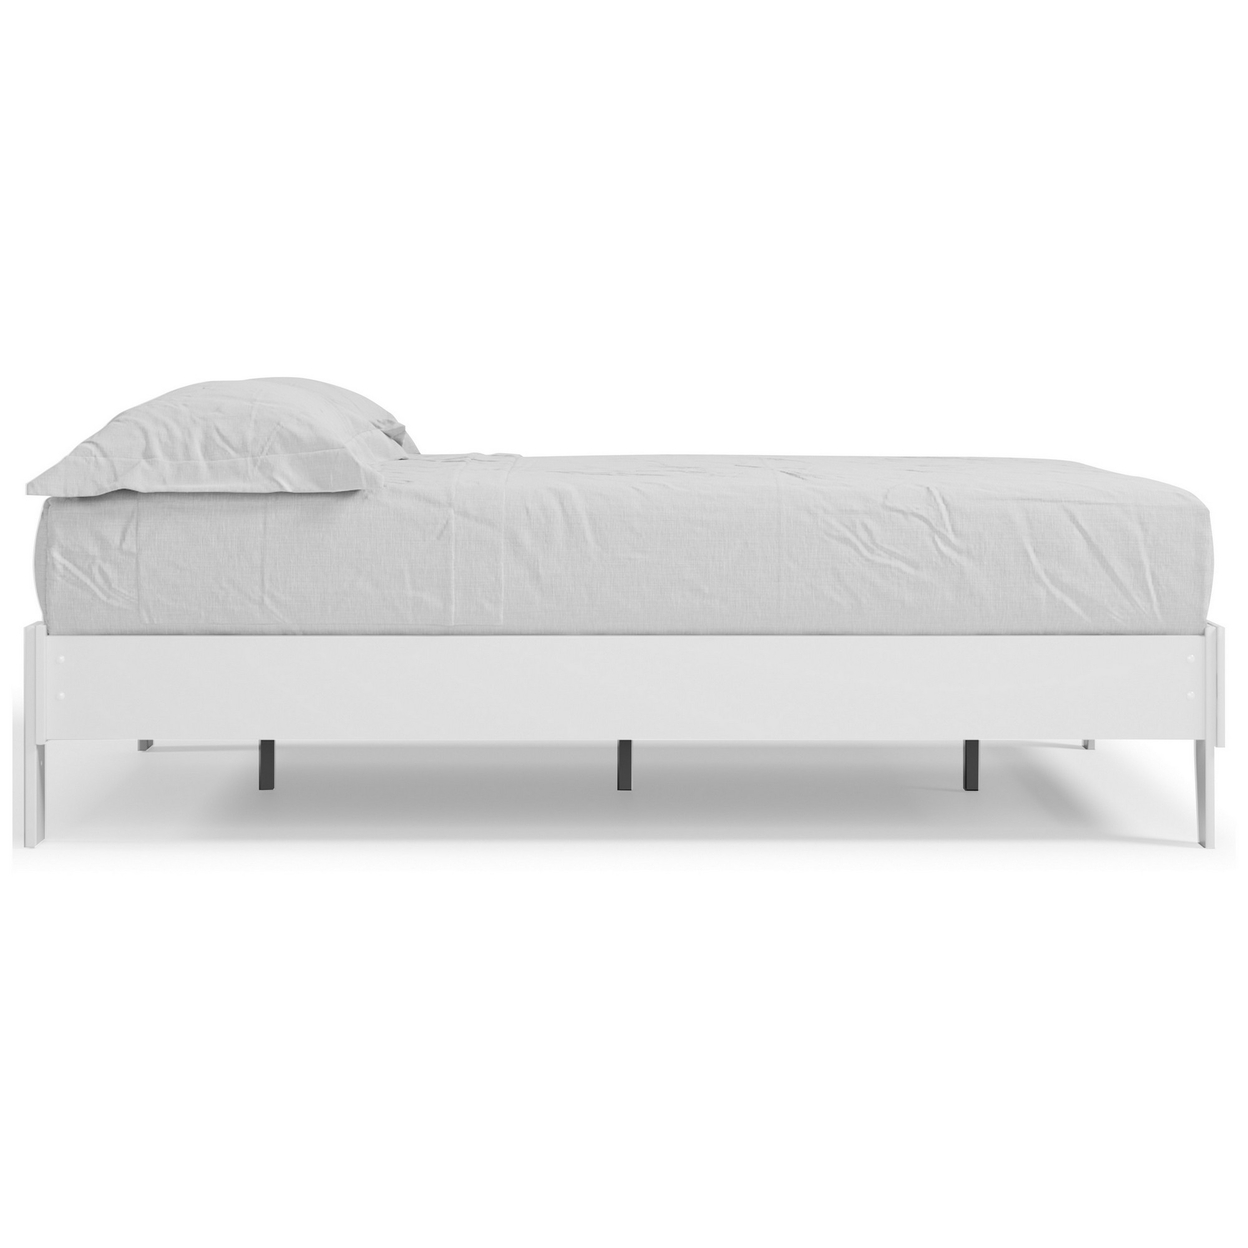 Lass Queen Size Bed, Platform Style, Modern Low Profile Frame, Clean White- Saltoro Sherpi